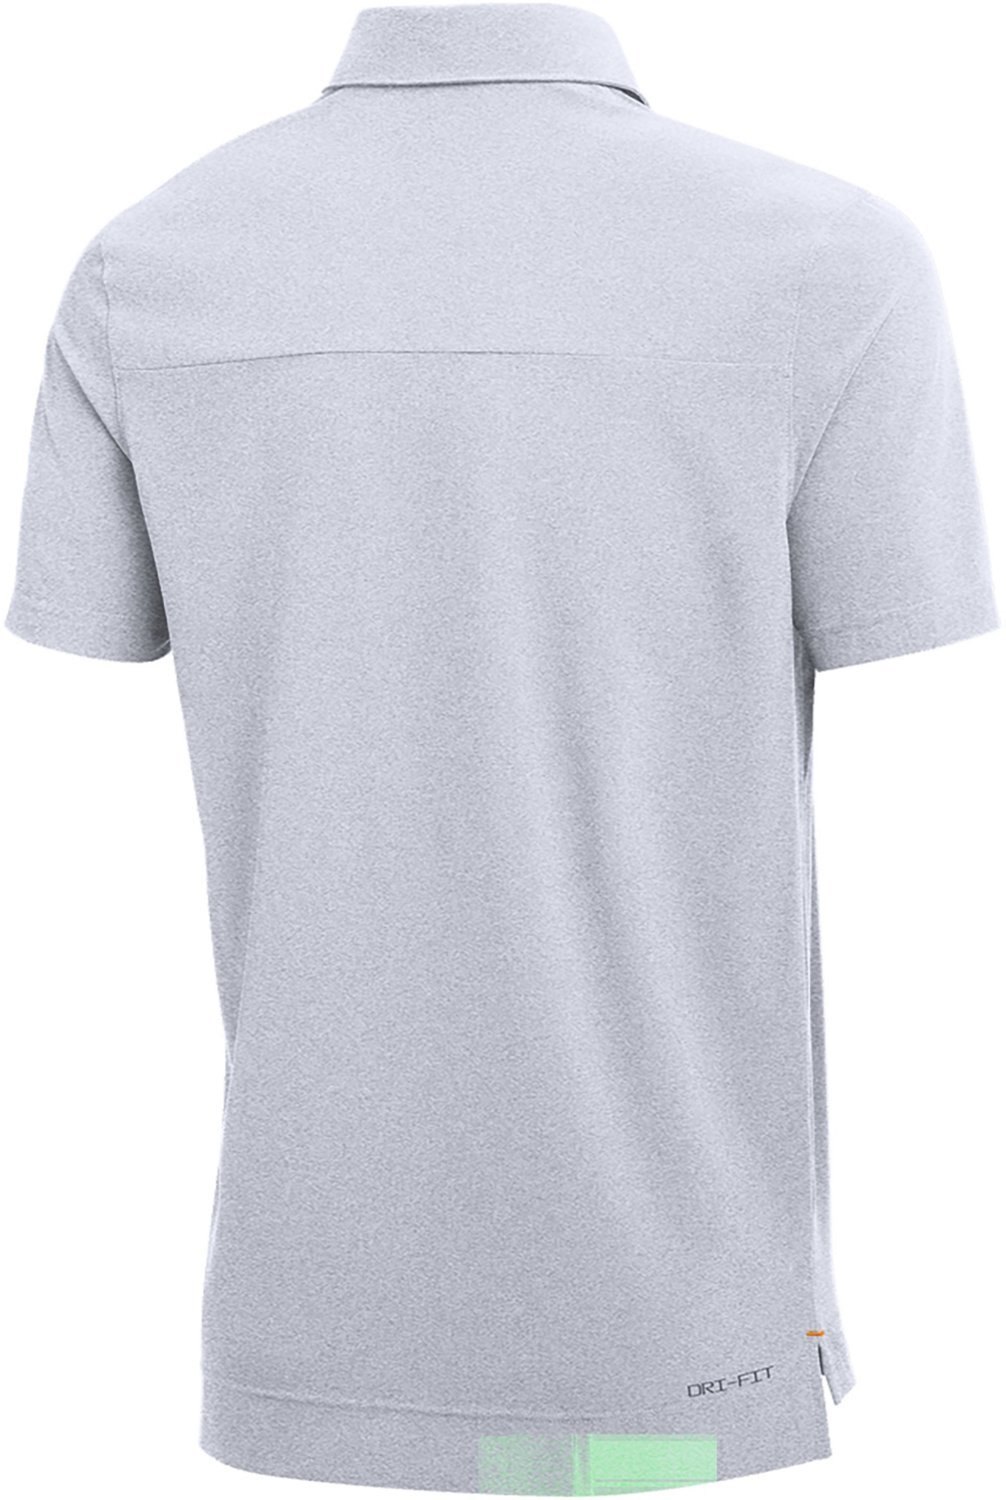 Nike Men's University of Tennessee Dri-FIT Coach Polo Shirt